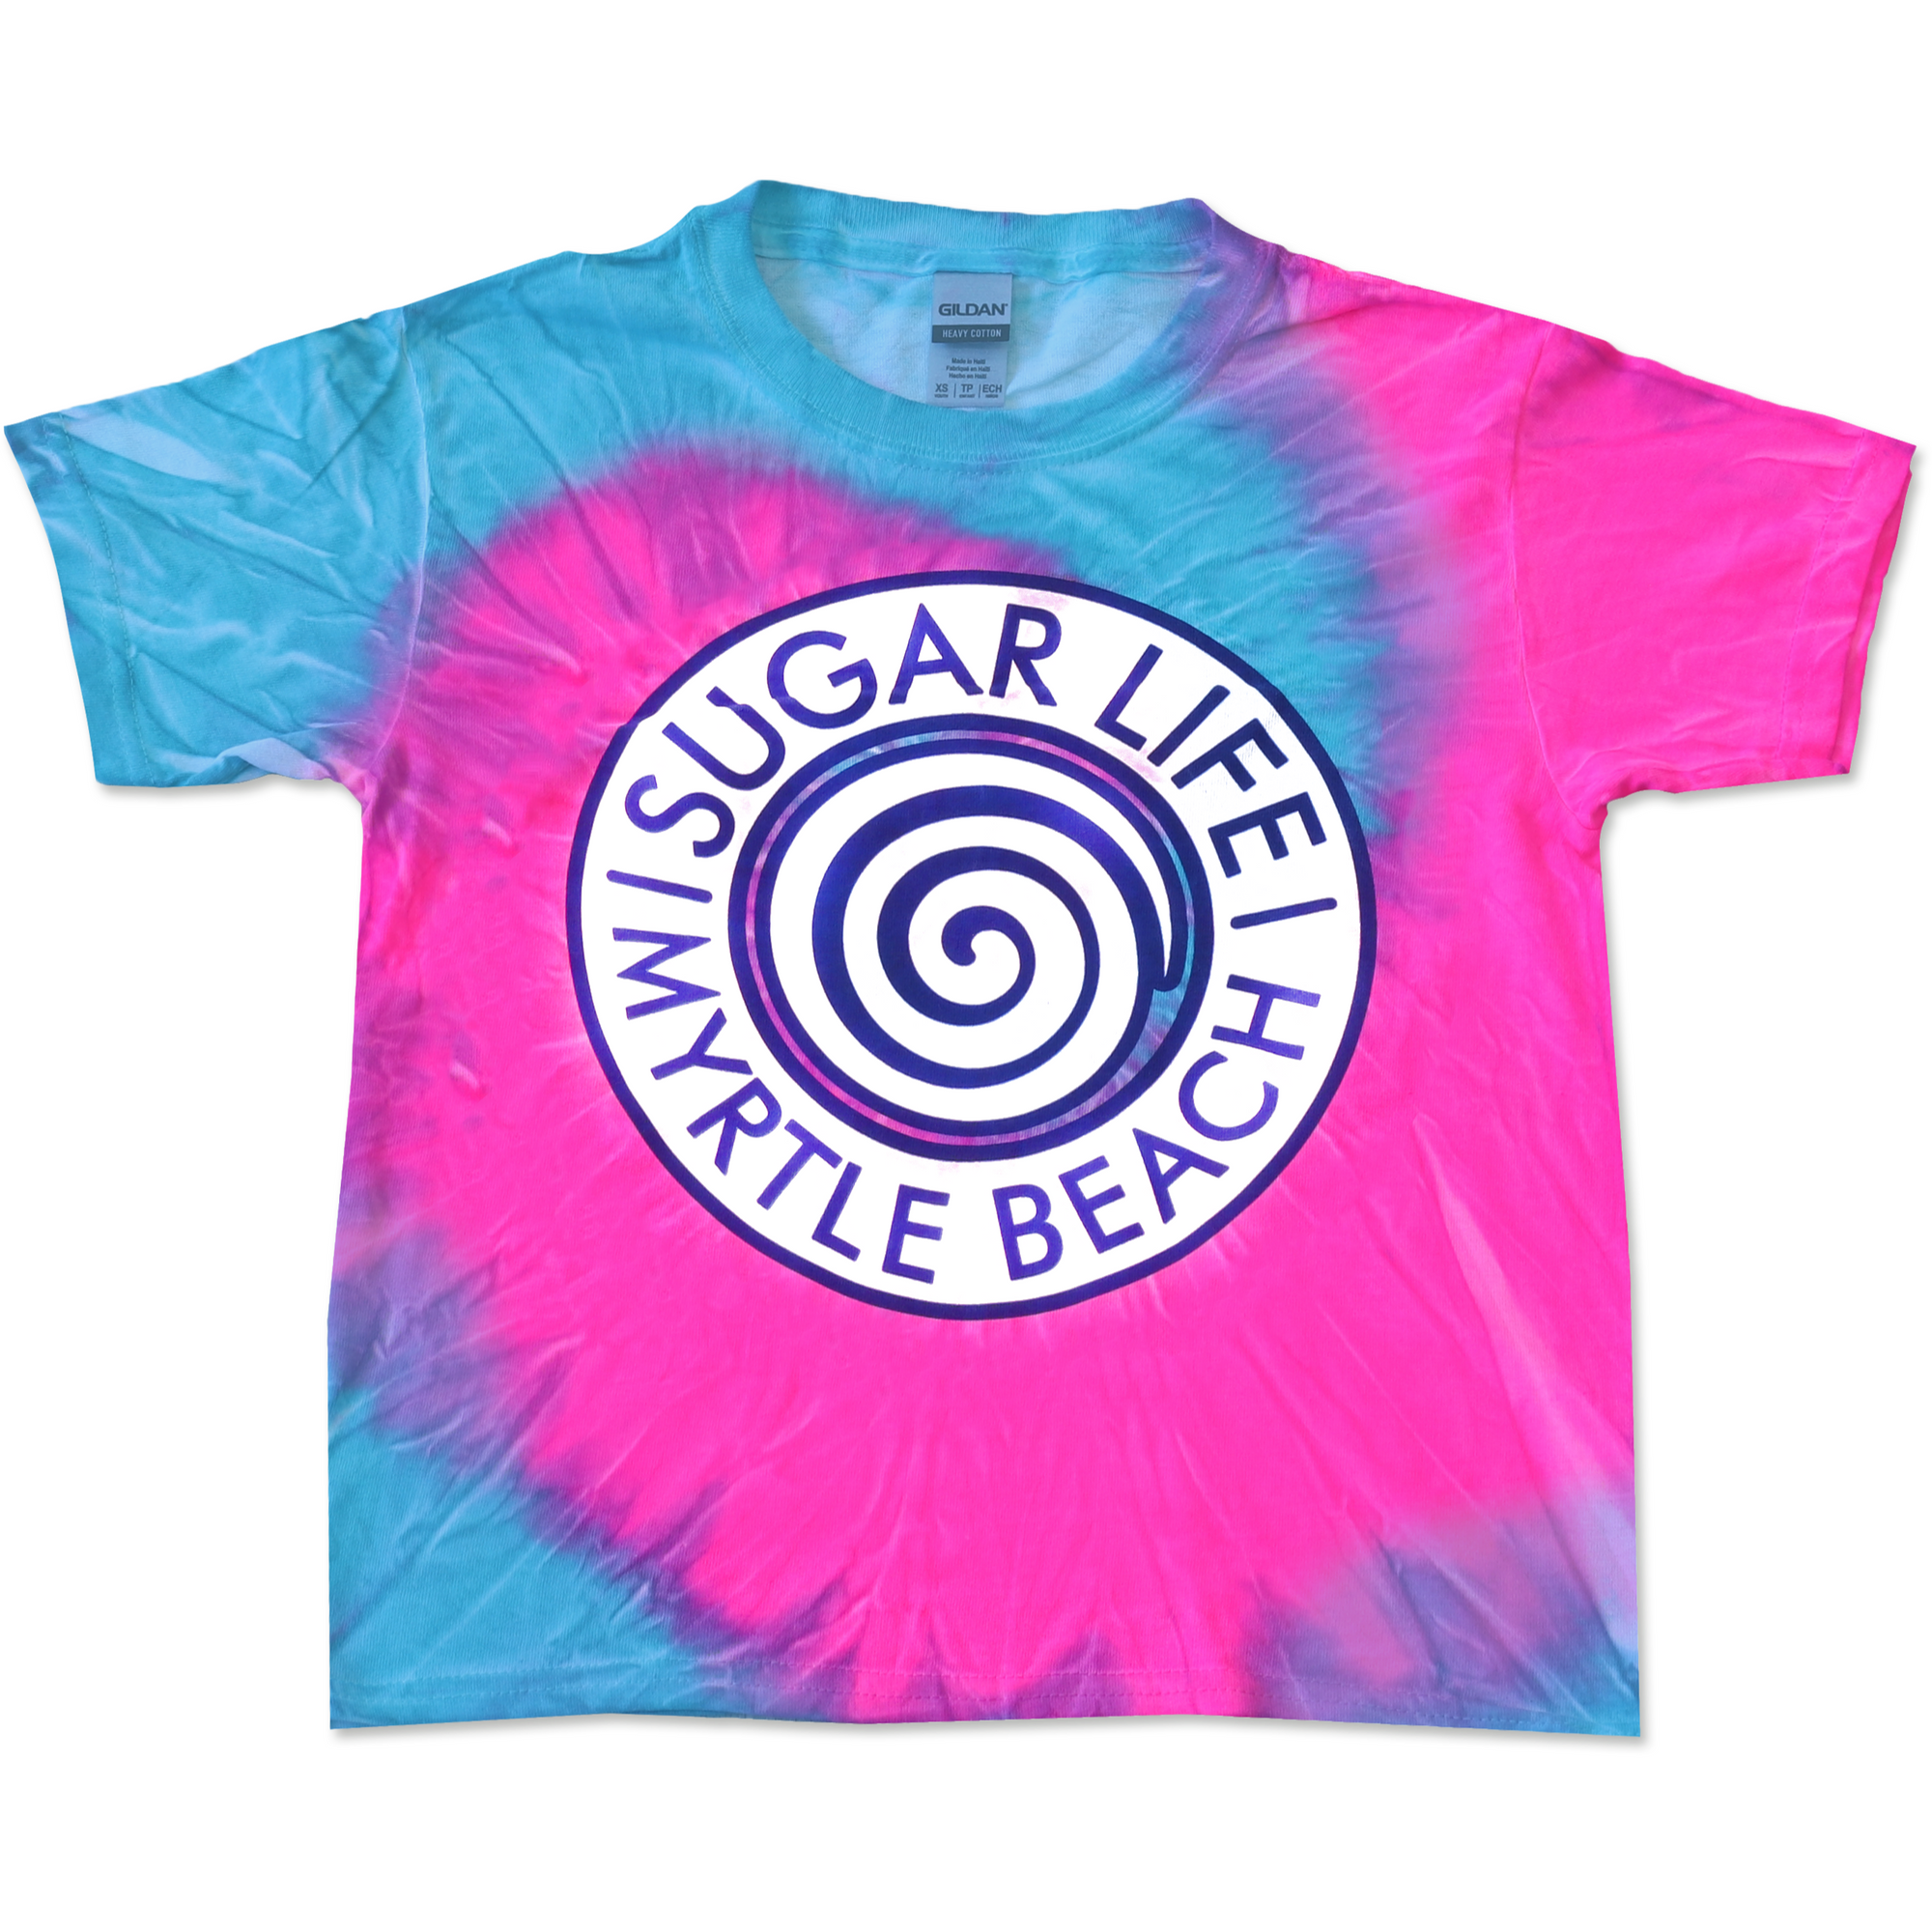 "Candy Swirl" Kids T-Shirt - Pink & Blue Cotton Candy Tye Dye